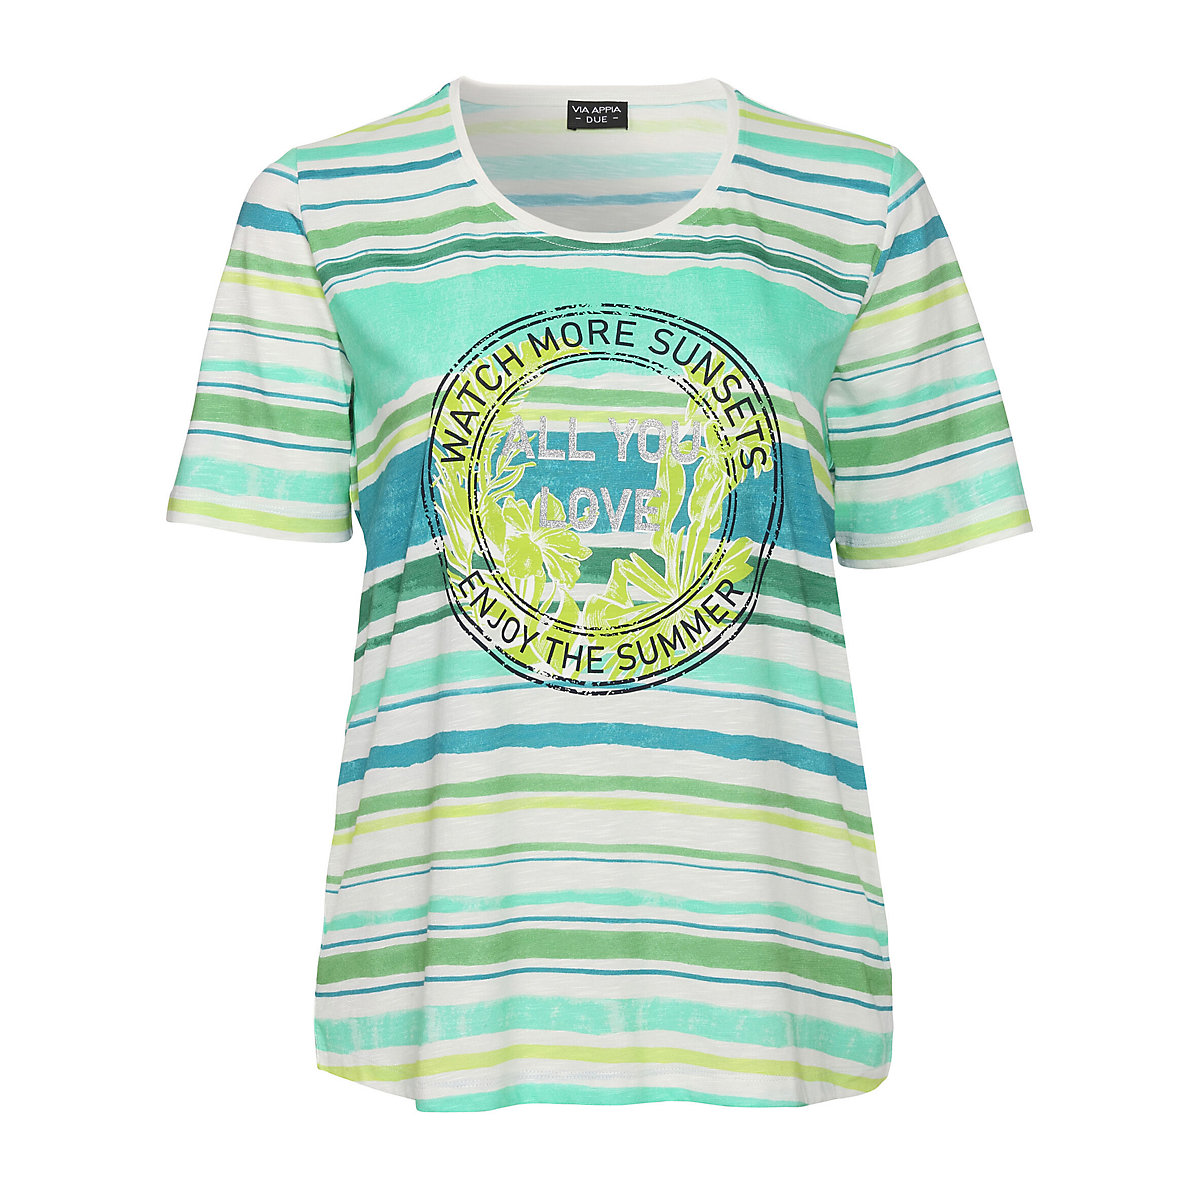 Via Appia T-Shirt Fesches T-Shirt mit Glitzerdetails grün